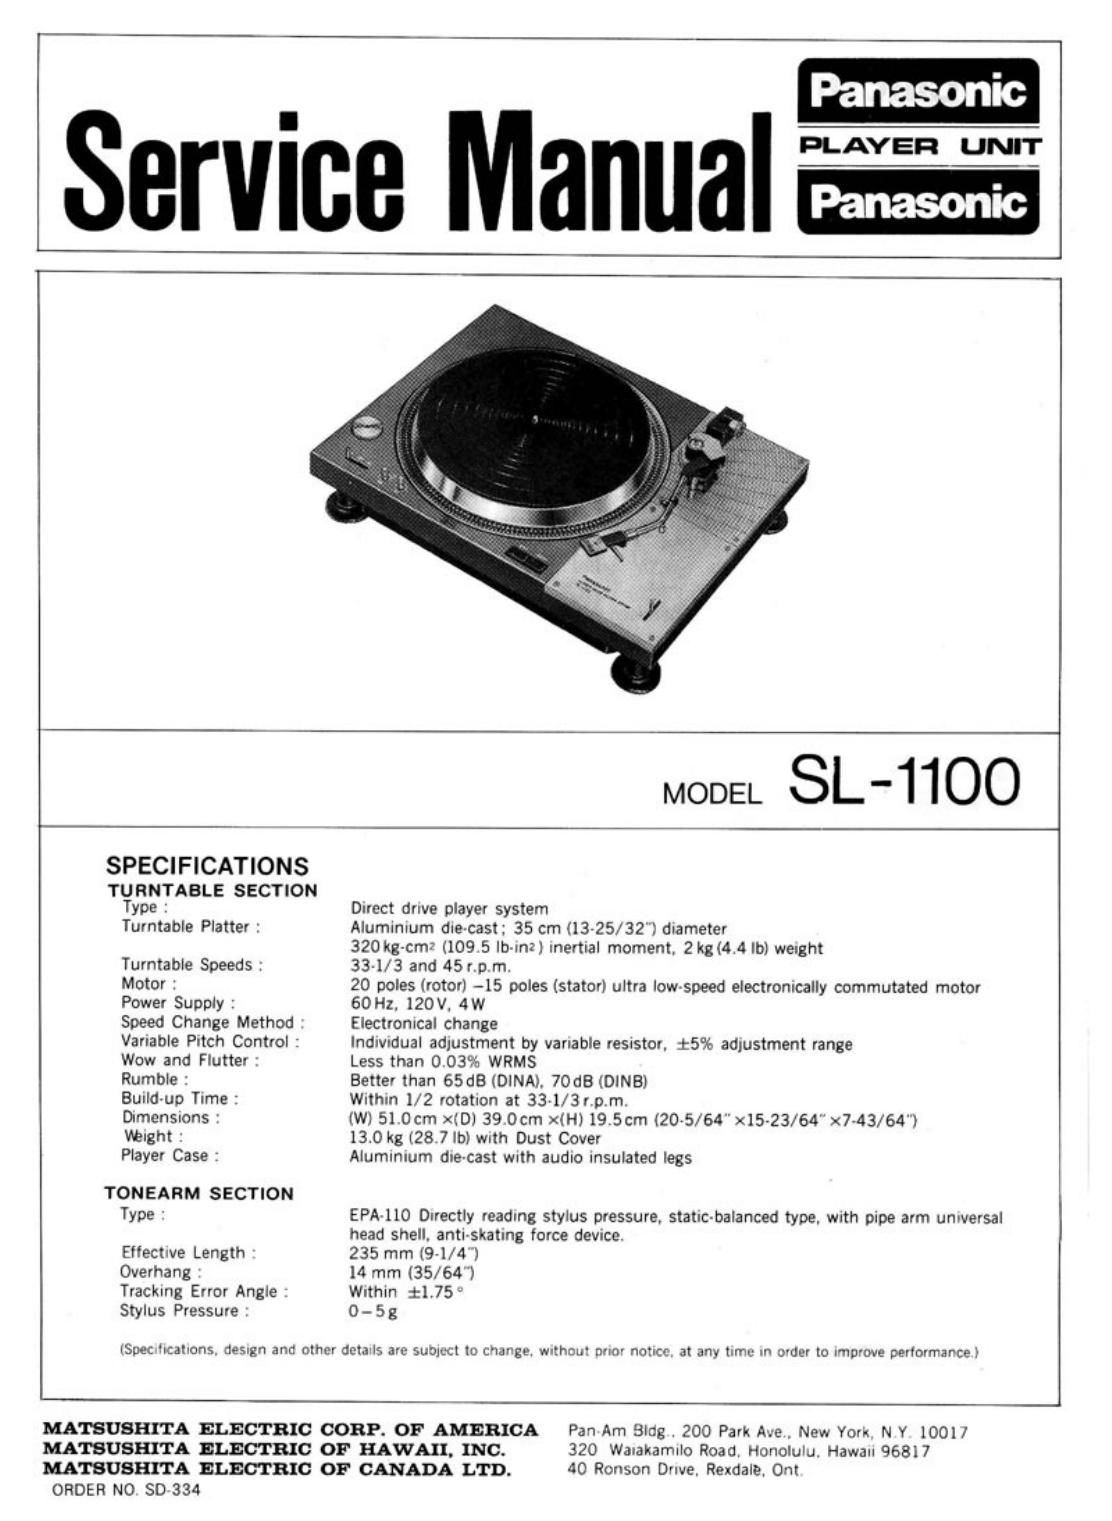 Technics SL 1100 Service Manual